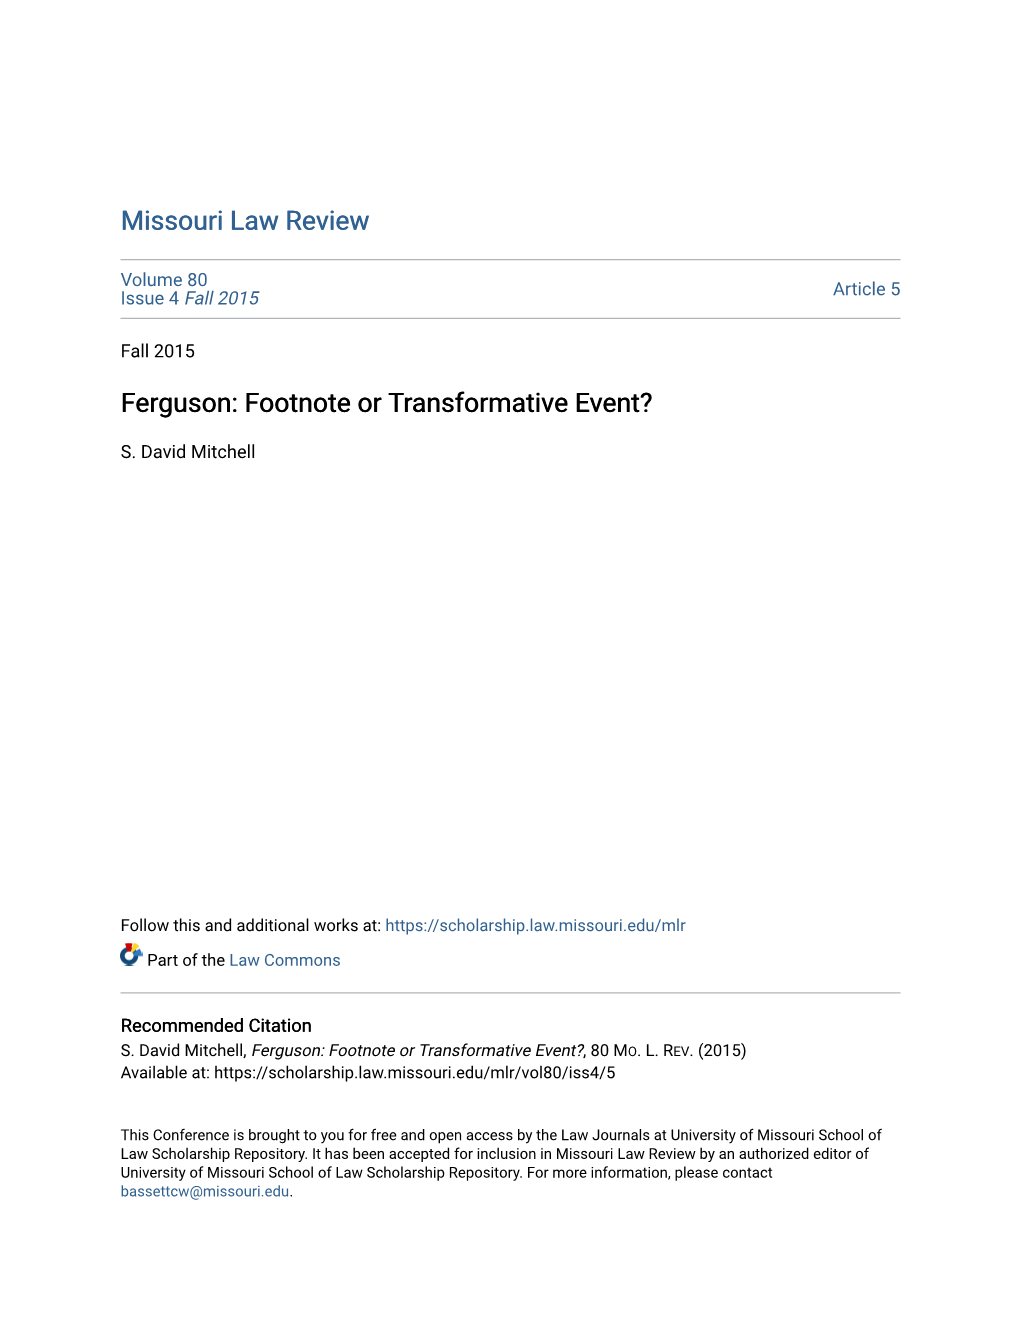 Ferguson: Footnote Or Transformative Event?